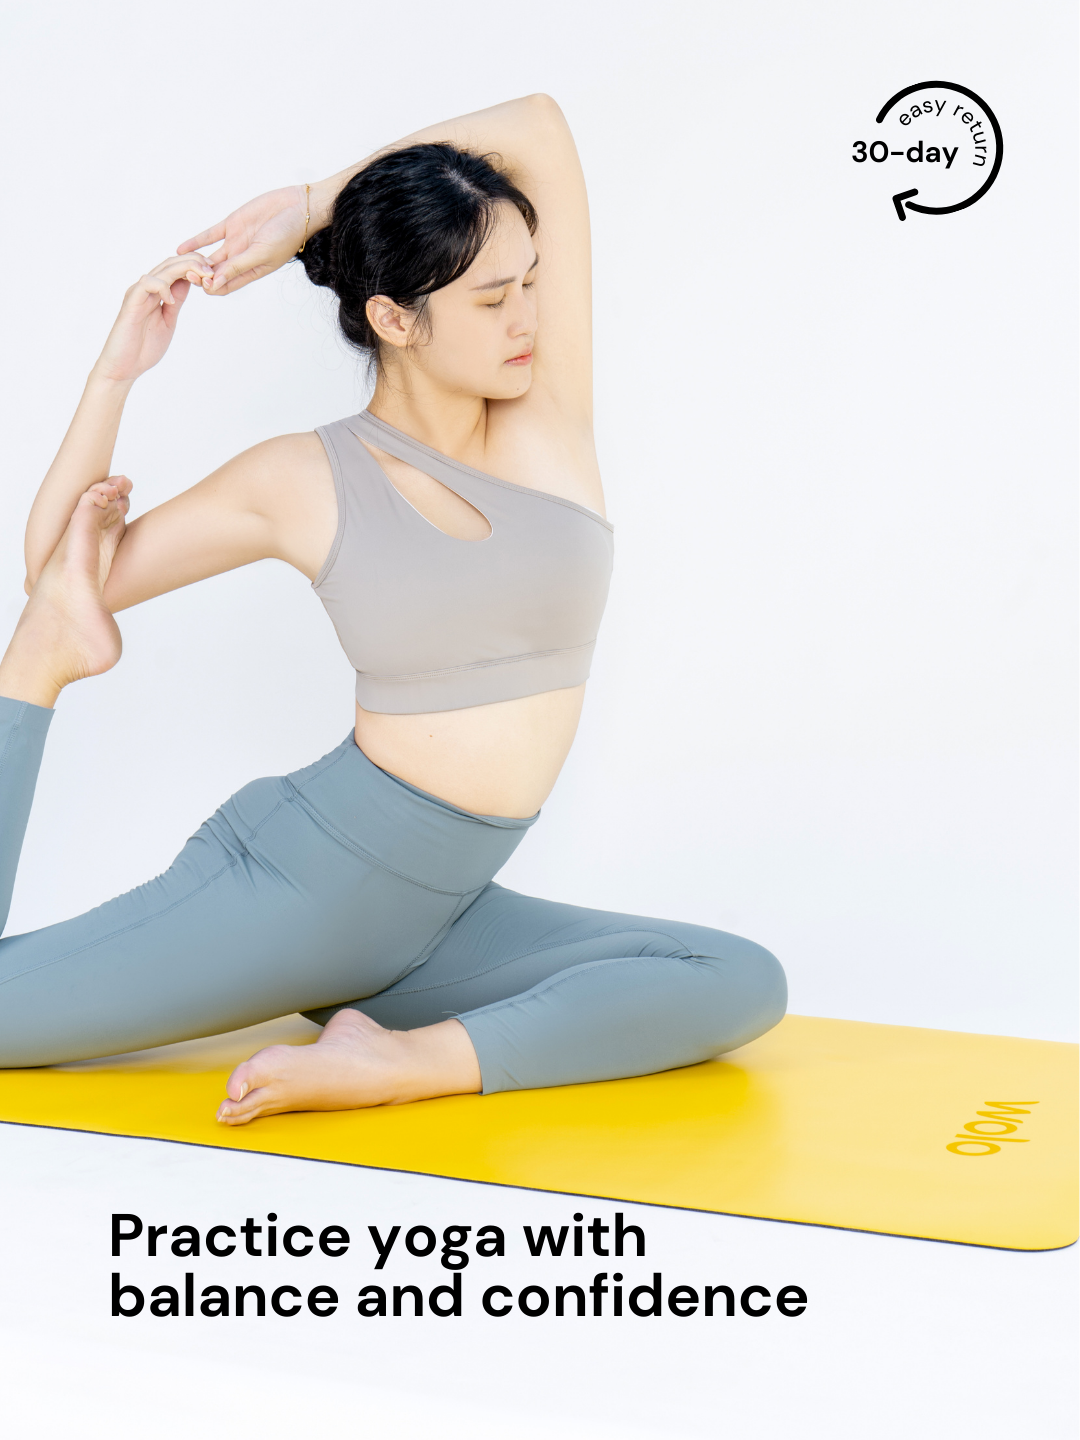 Lady doing yoga a saffron yellow yoga mat